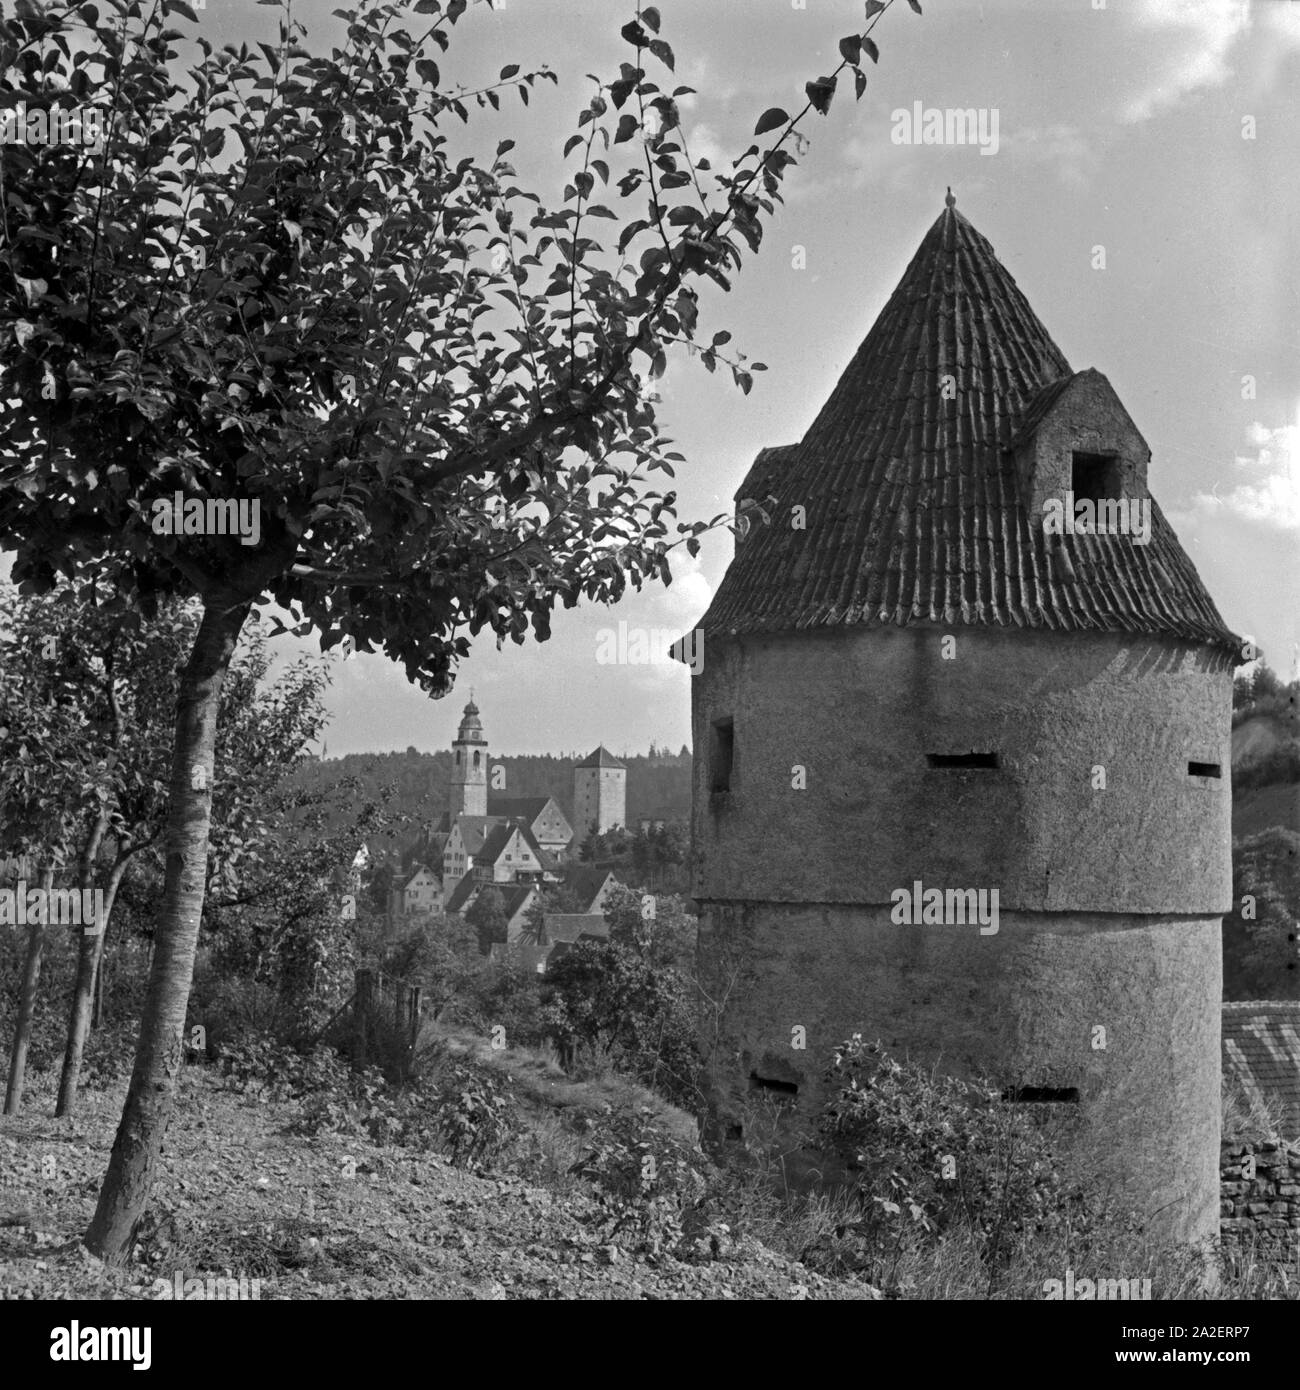 Der Ringmauerturm in Horb am Neckar, Schwarzwald, Deutschland 1930er Jahre. Guardare fuori da una cortina muraria a Horb al fiume Neckar, Foresta Nera, Germania 1930s. Foto Stock